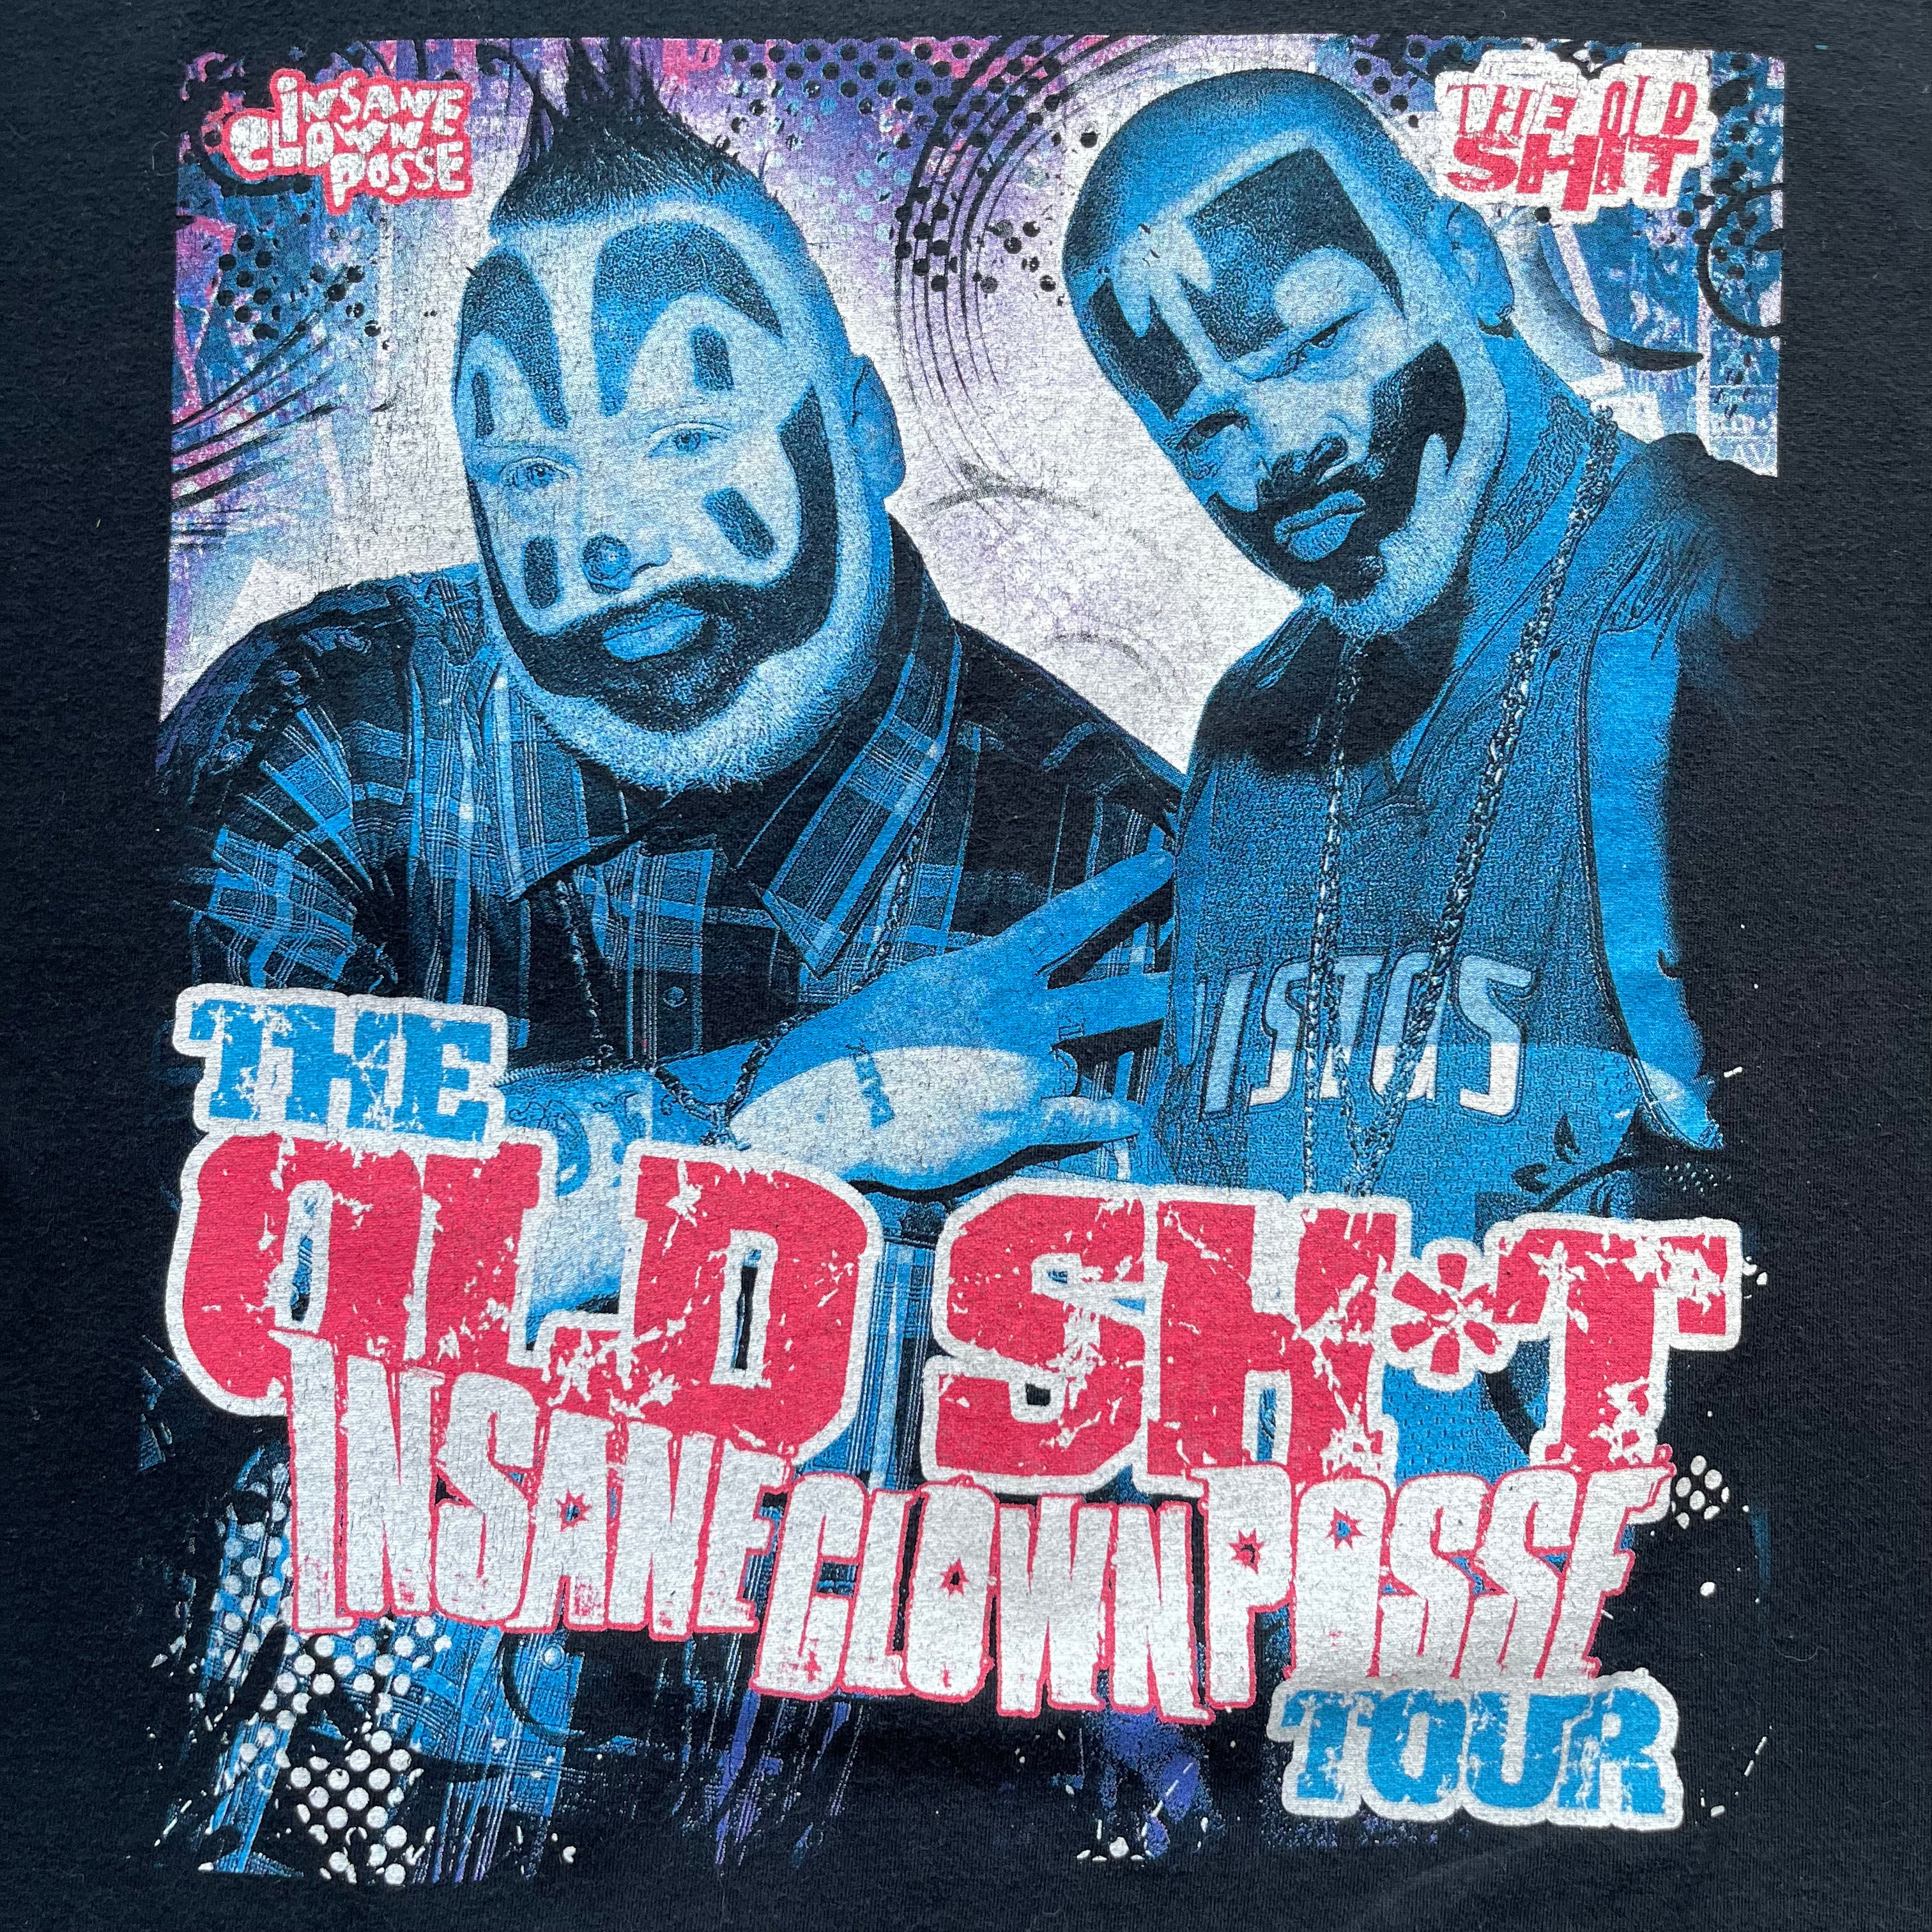 Old Shit Insane Clown Pose Tour T-shirt